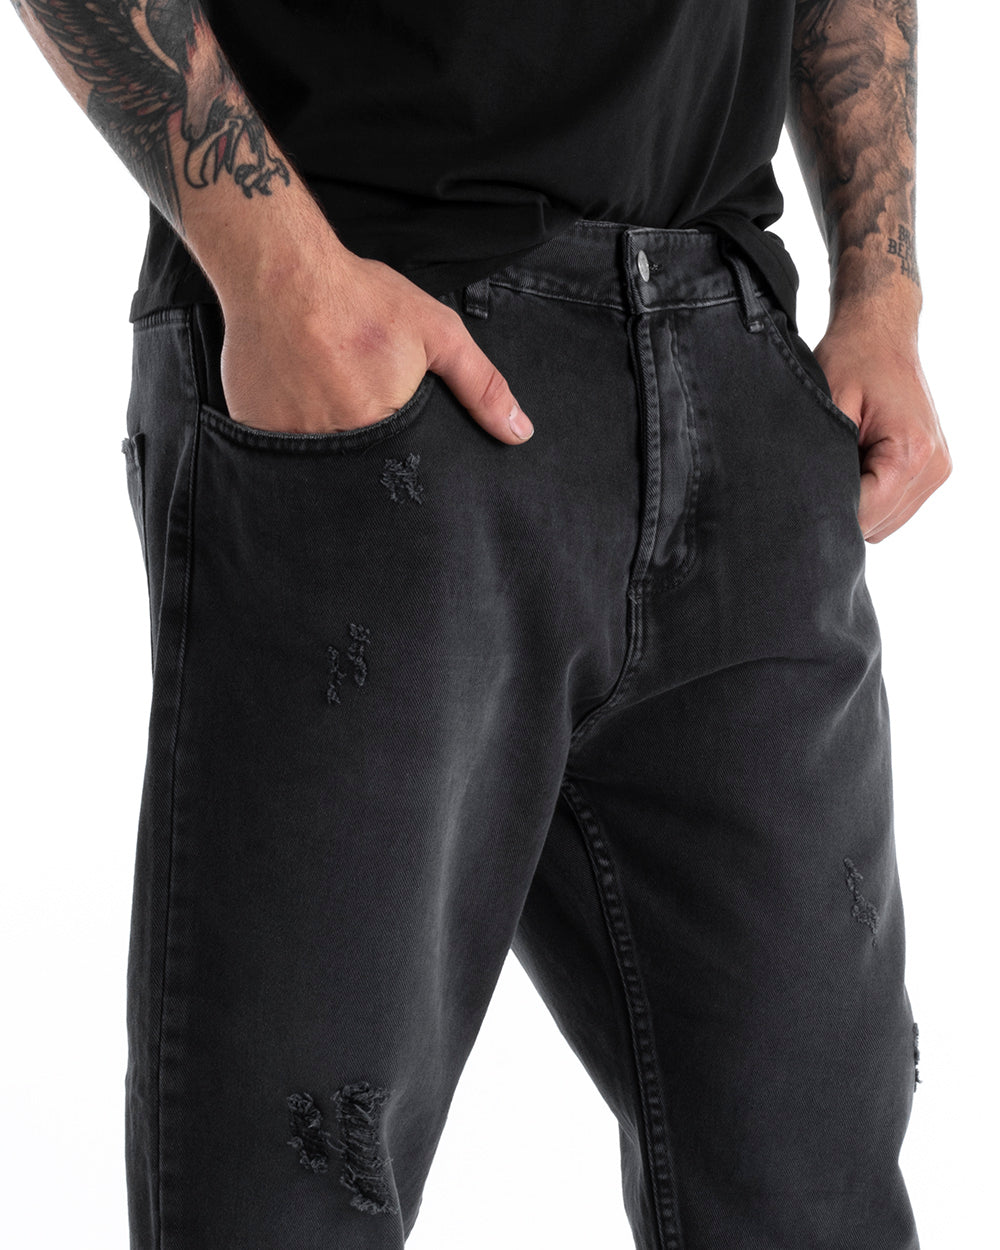 Pantaloni Jeans Uomo Loose Fit Denim Nero Stone Washed Cinque Tasche GIOSAL-P5278A